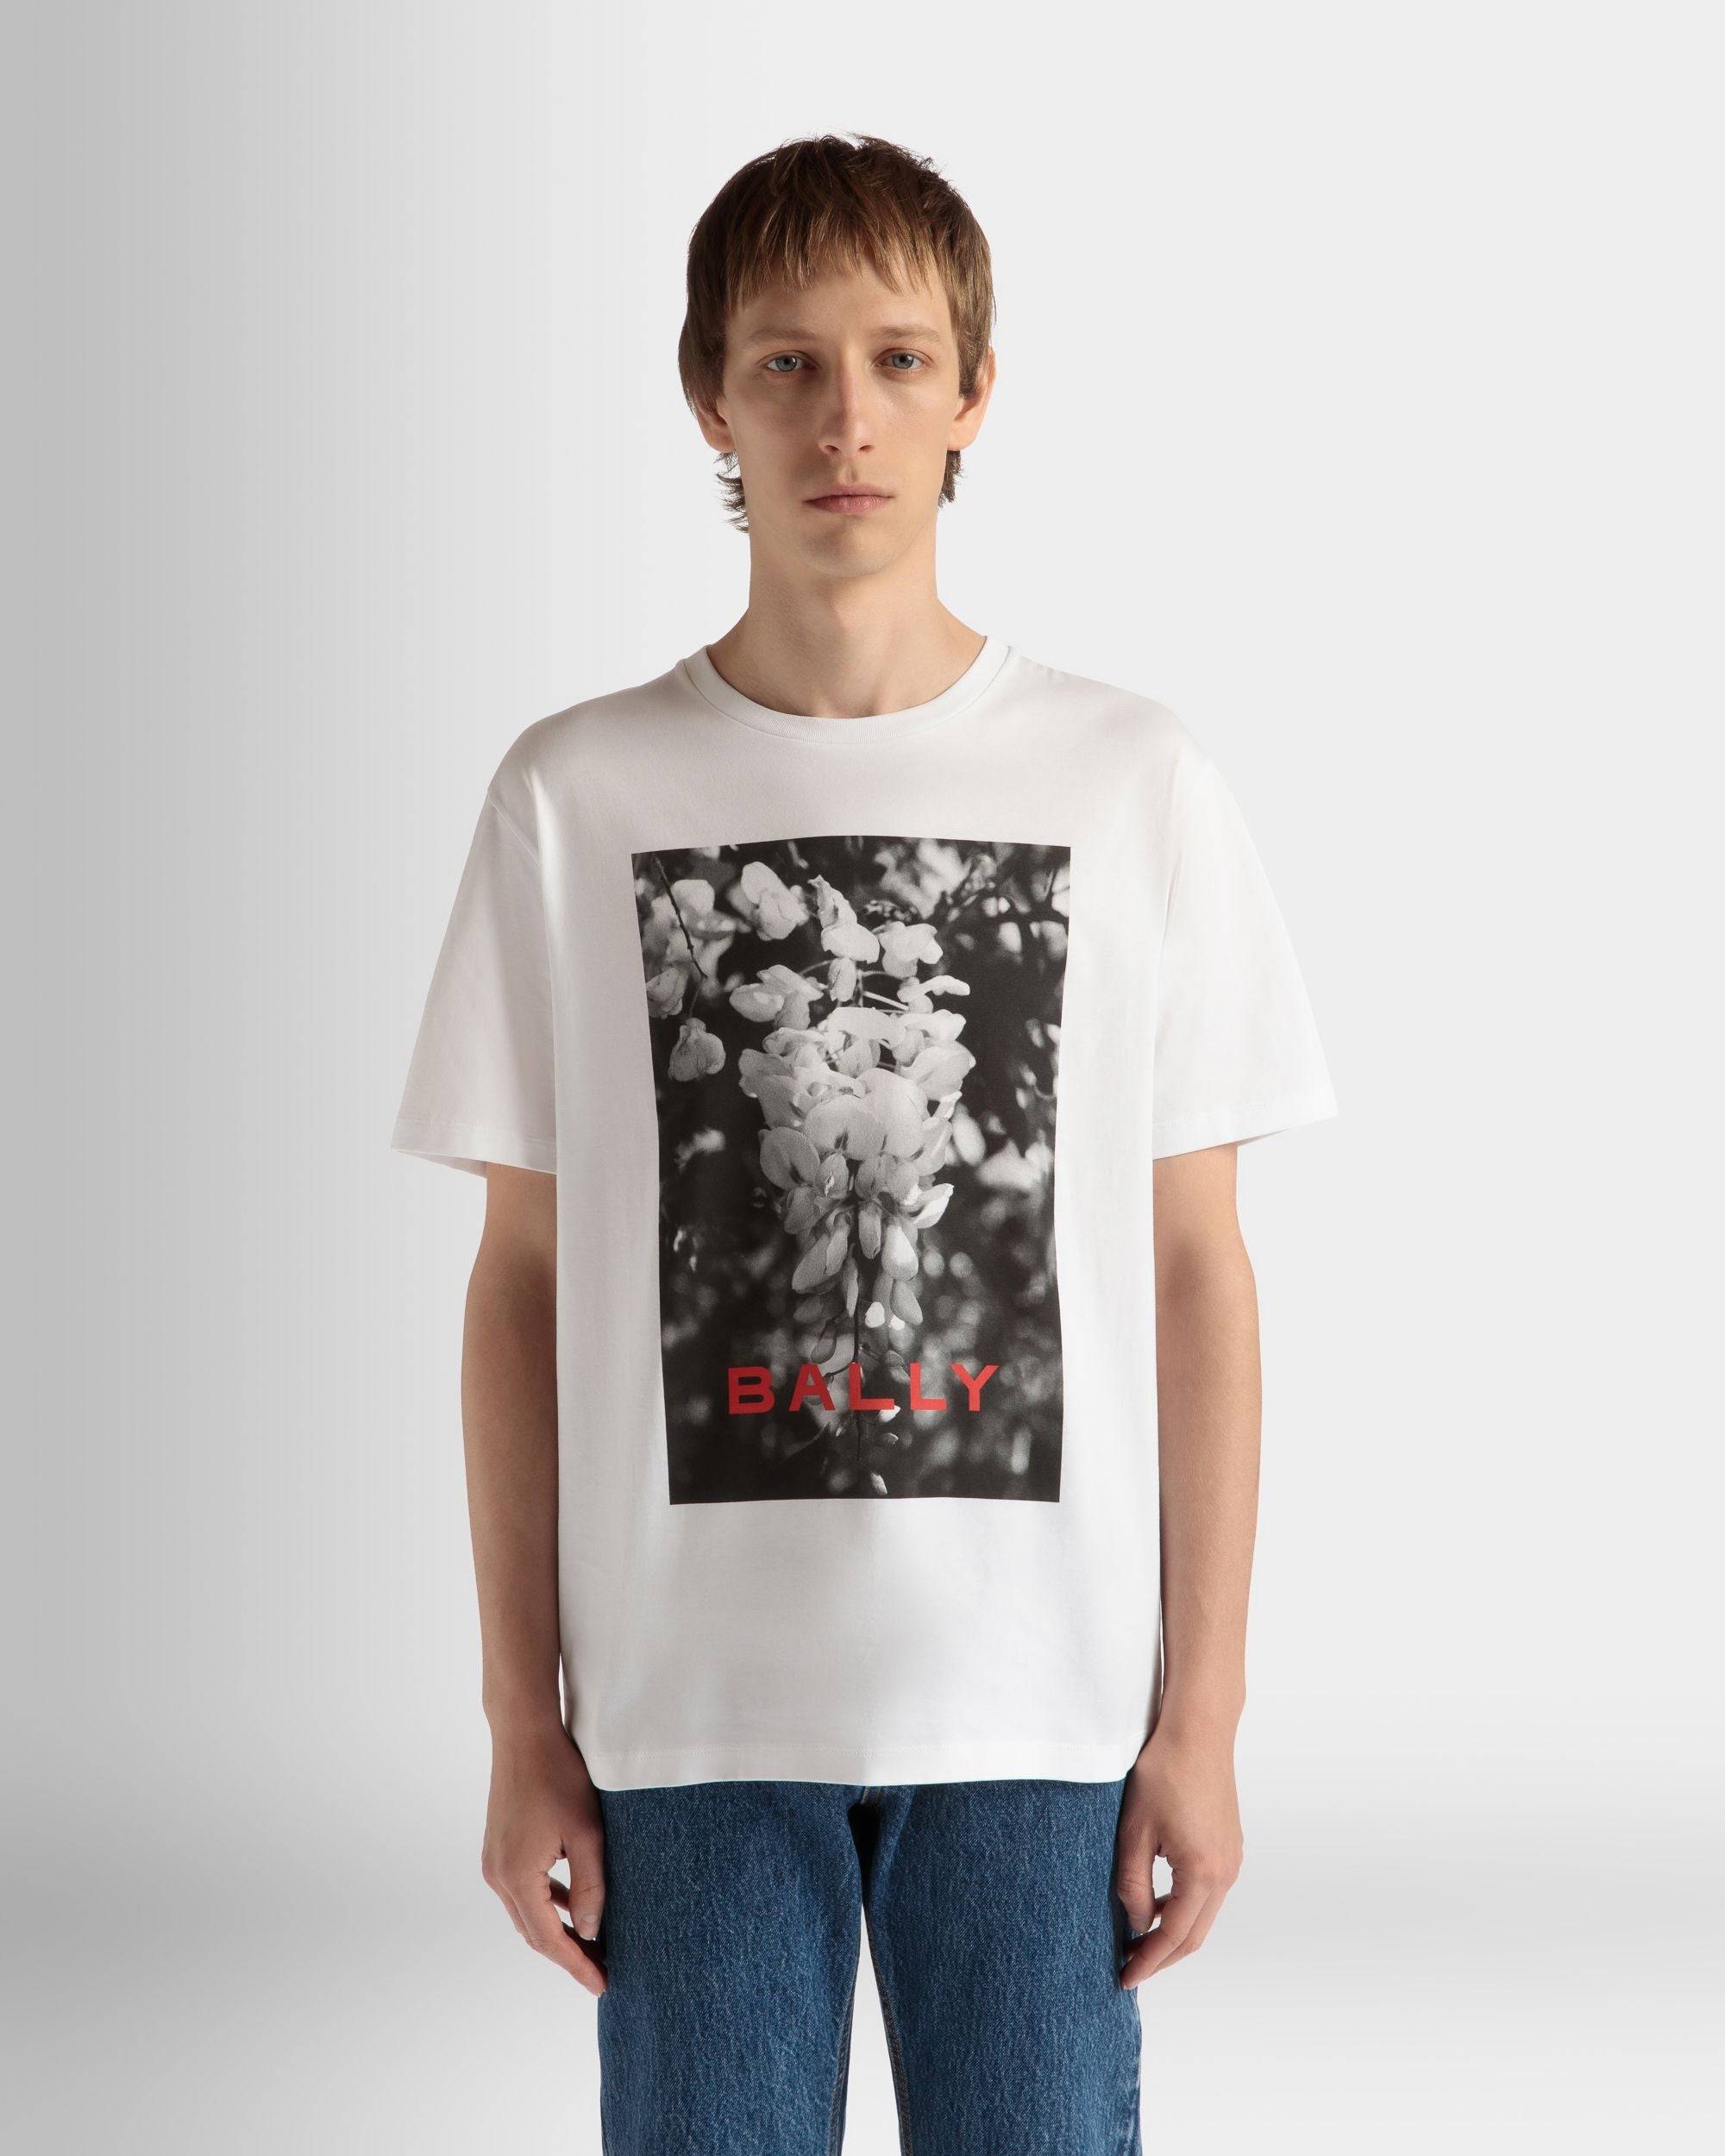 Printed T-Shirt in White Cotton - Men's - Bally - 03